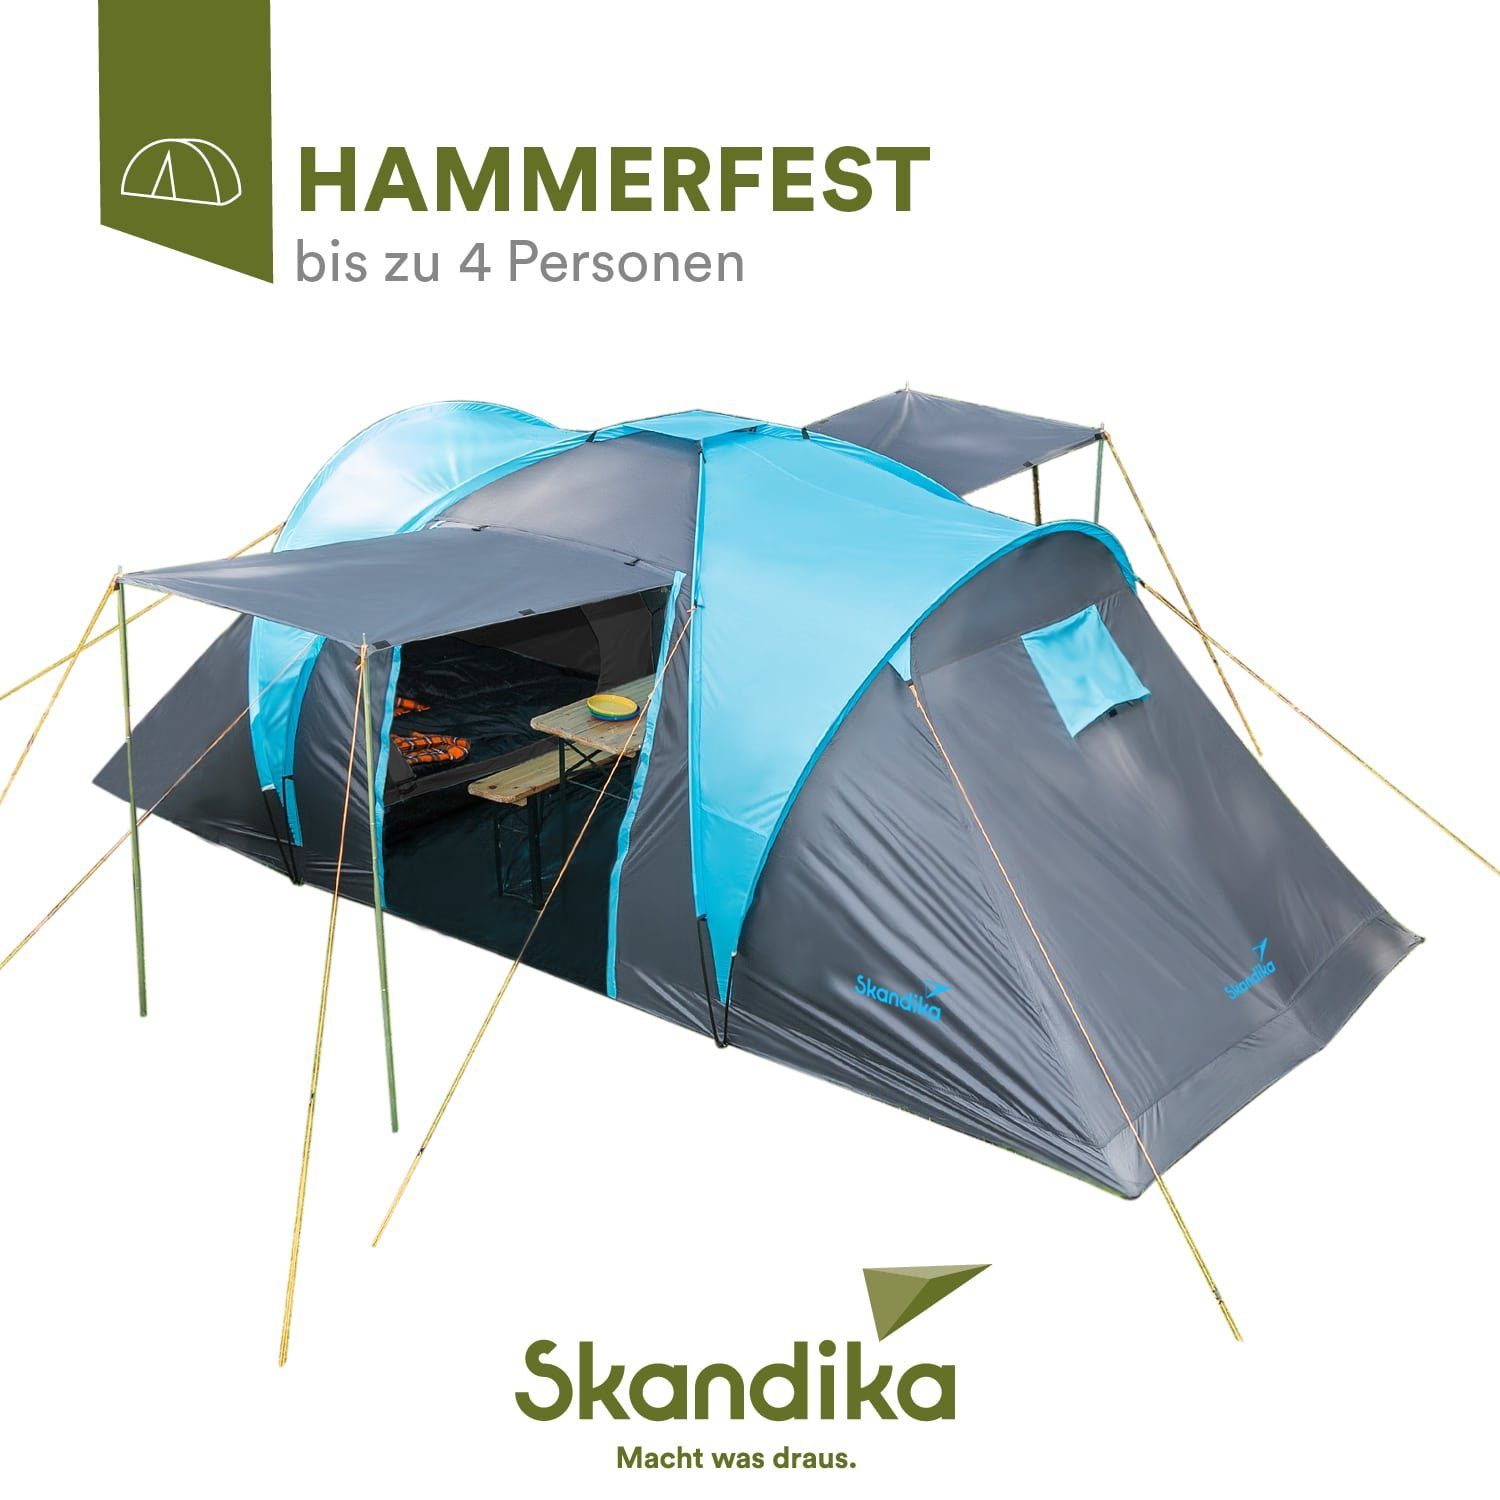 Zelte, Skandika Personen: 4 4 Standard Hammerfest Personen Version Kuppelzelt